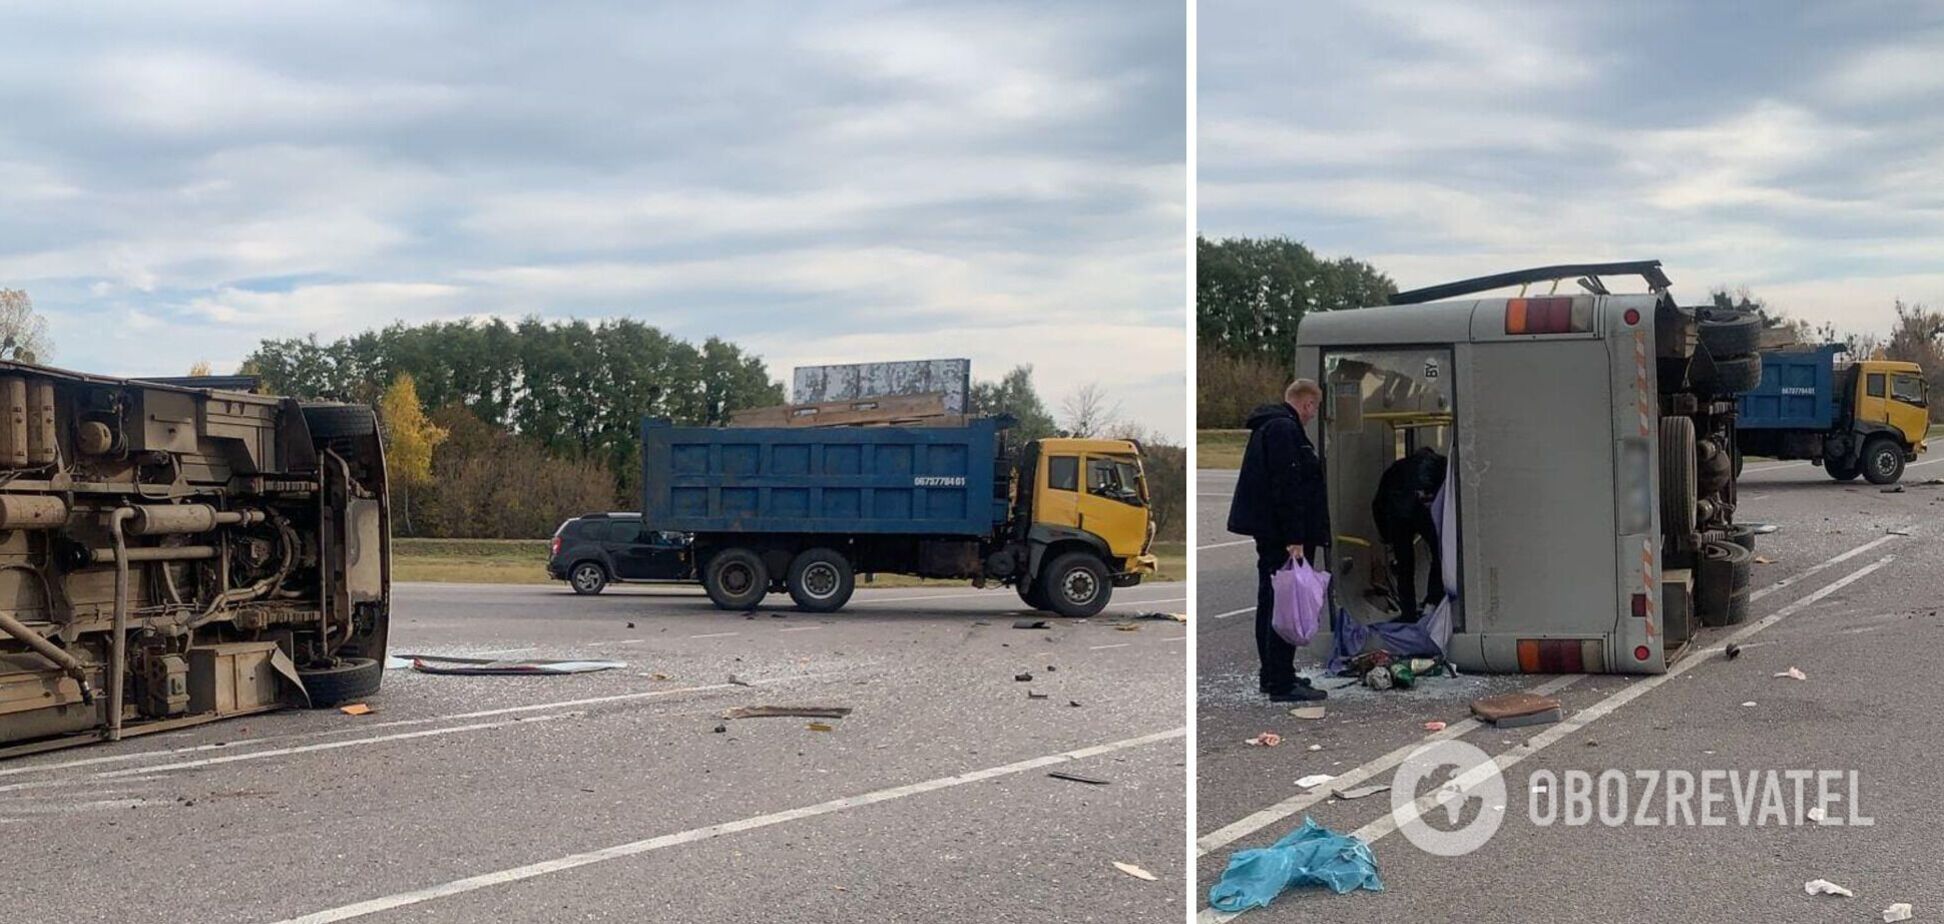 Авария произошла на автодороге Киев-Знаменка